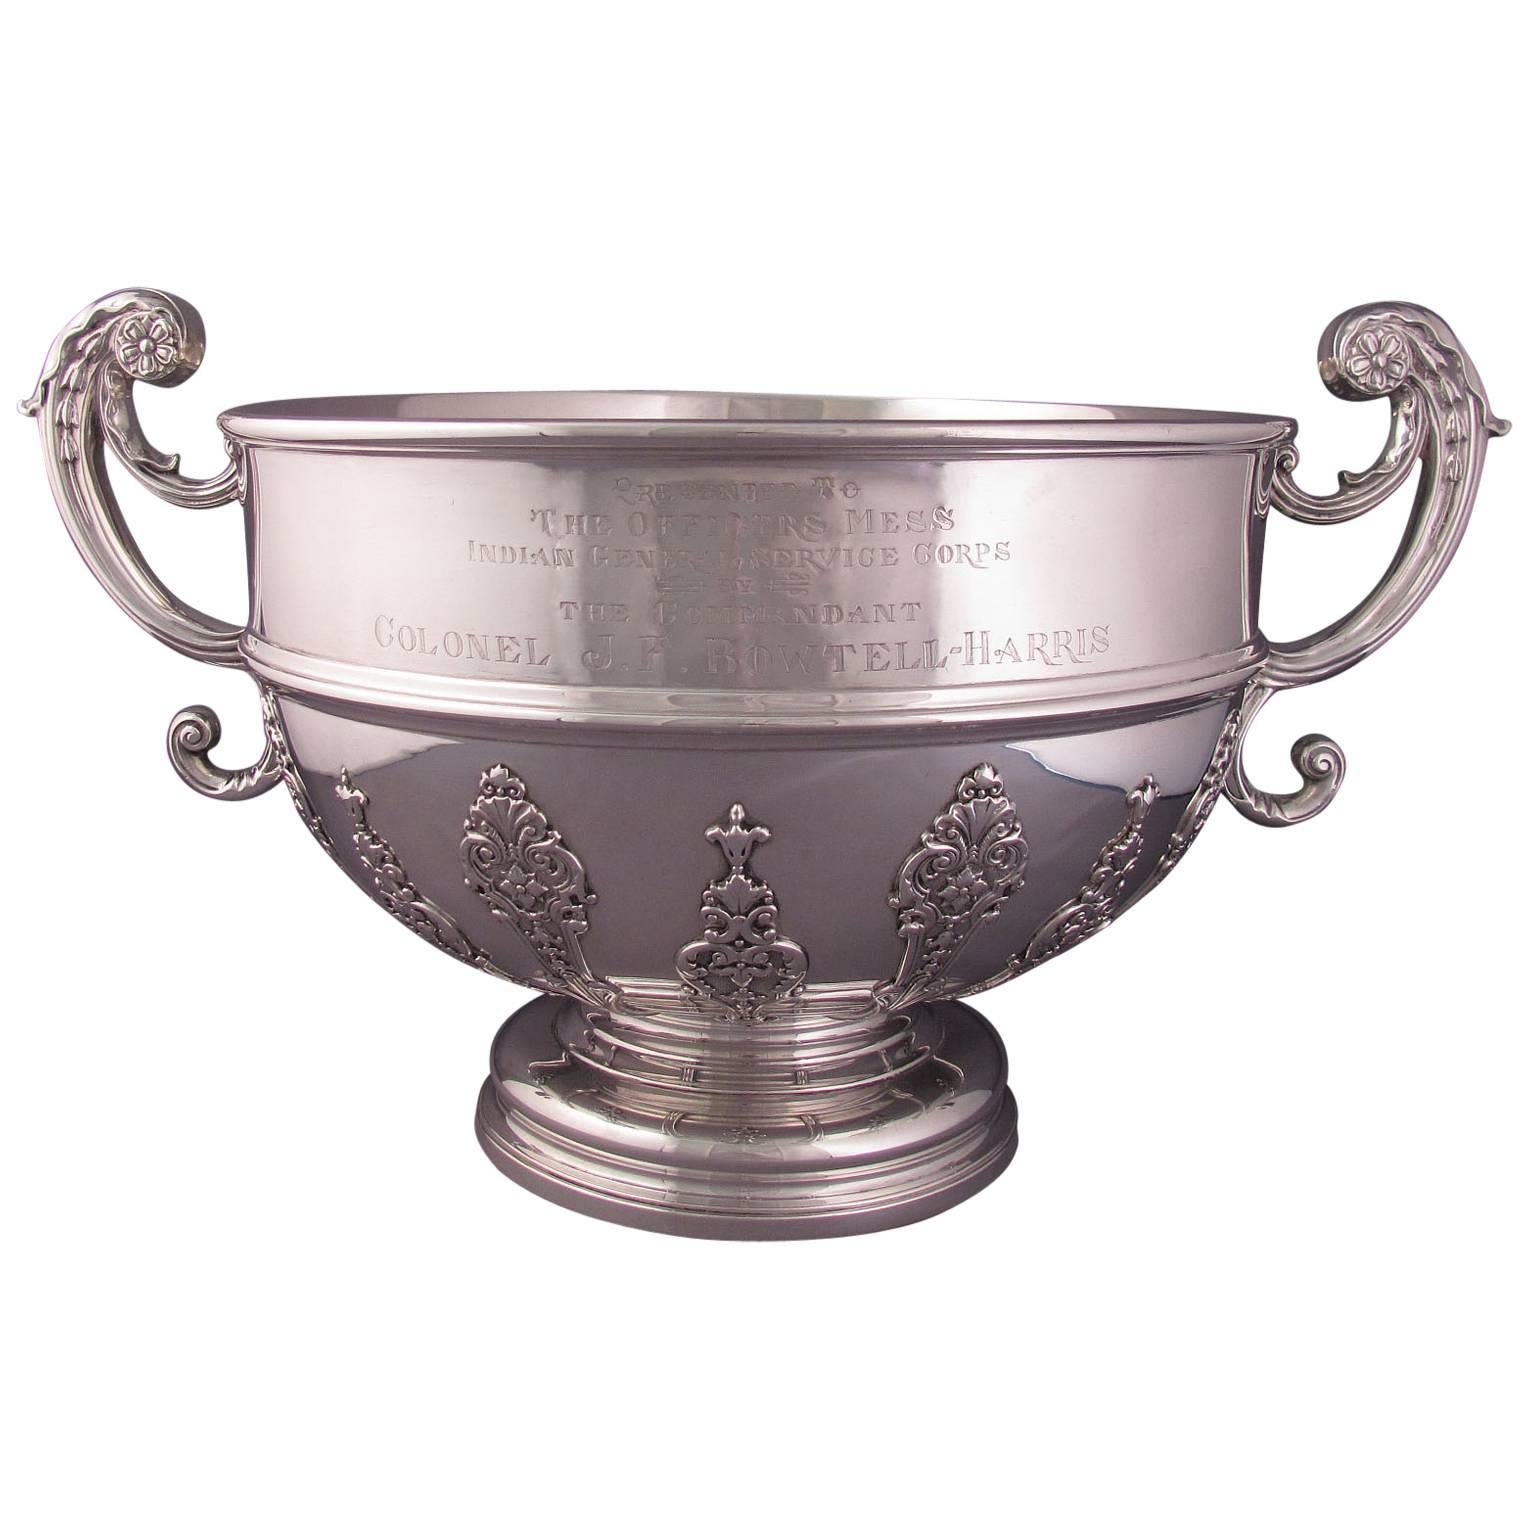 Massive Edwardian Sterling Silver Punch Bowl